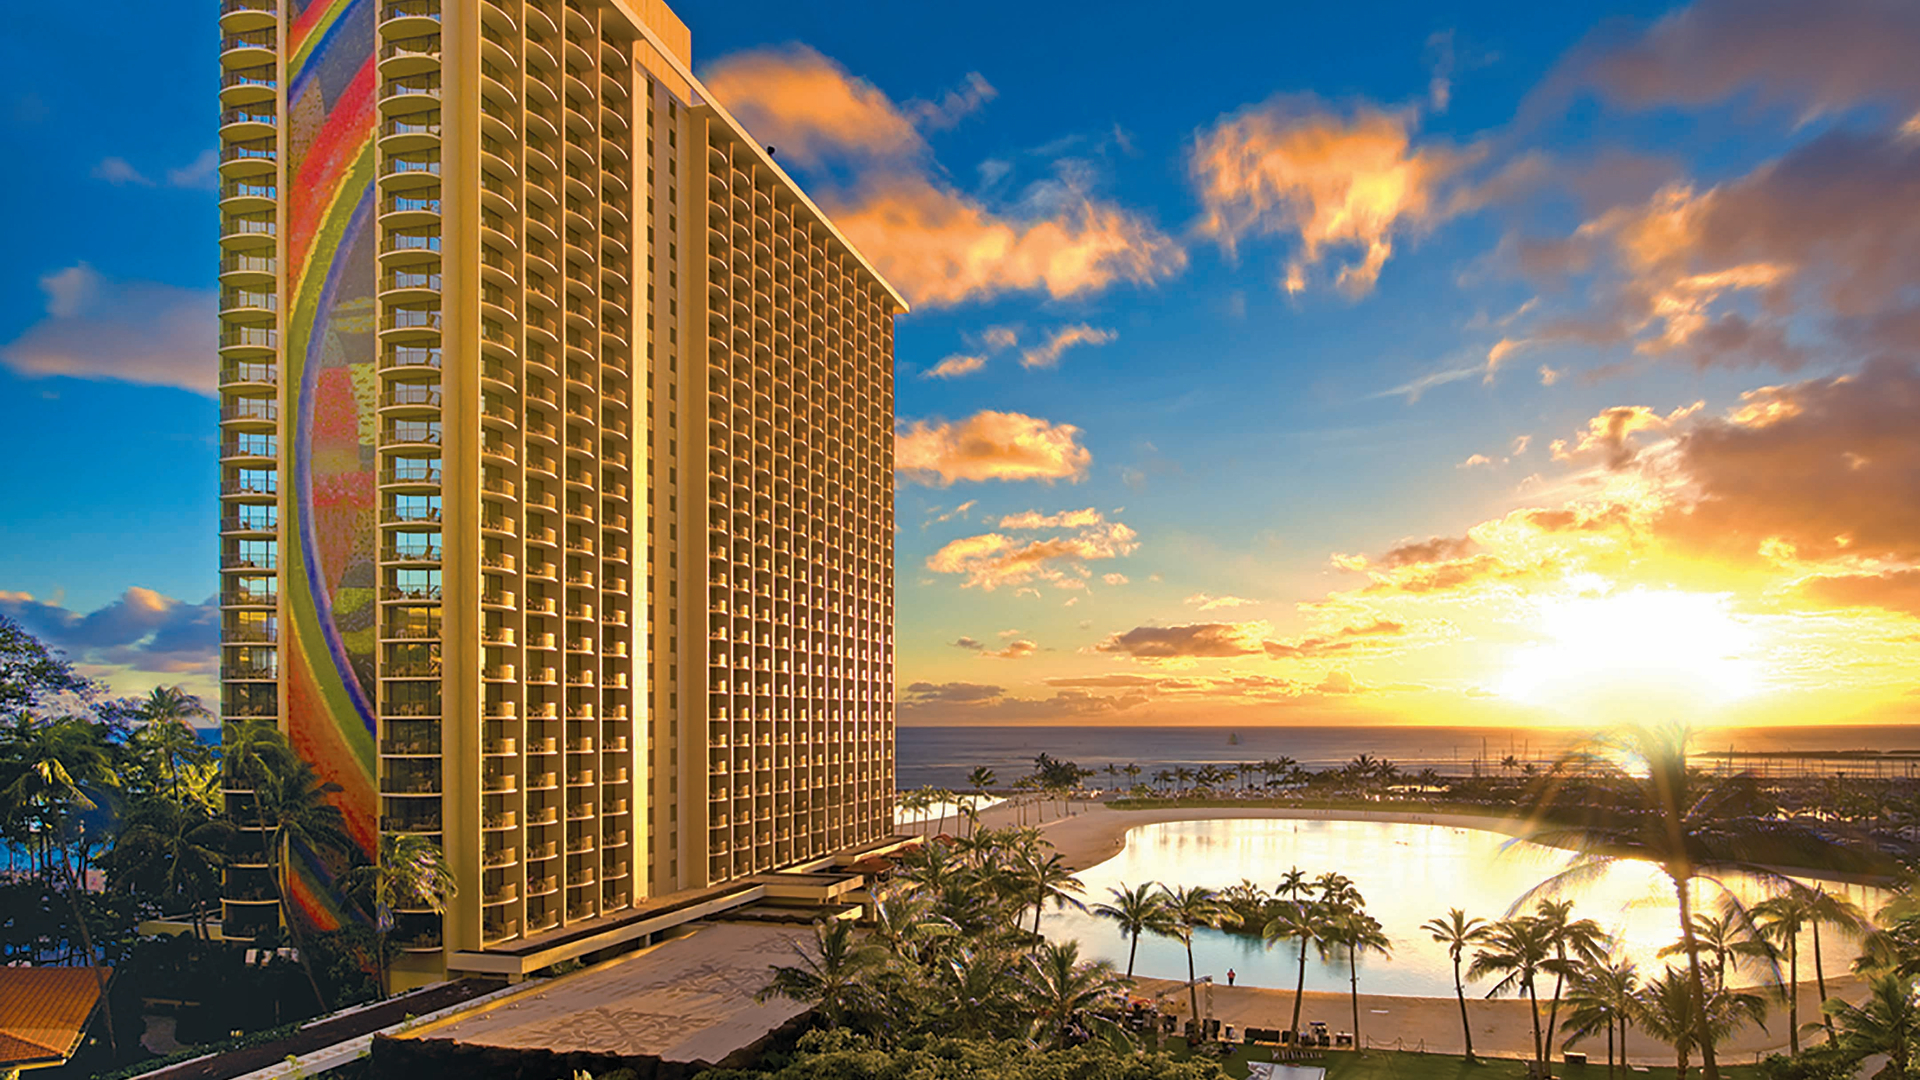 Photo of Hilton Hawaiian Village Waikiki Beach Resort, Honolulu, HI